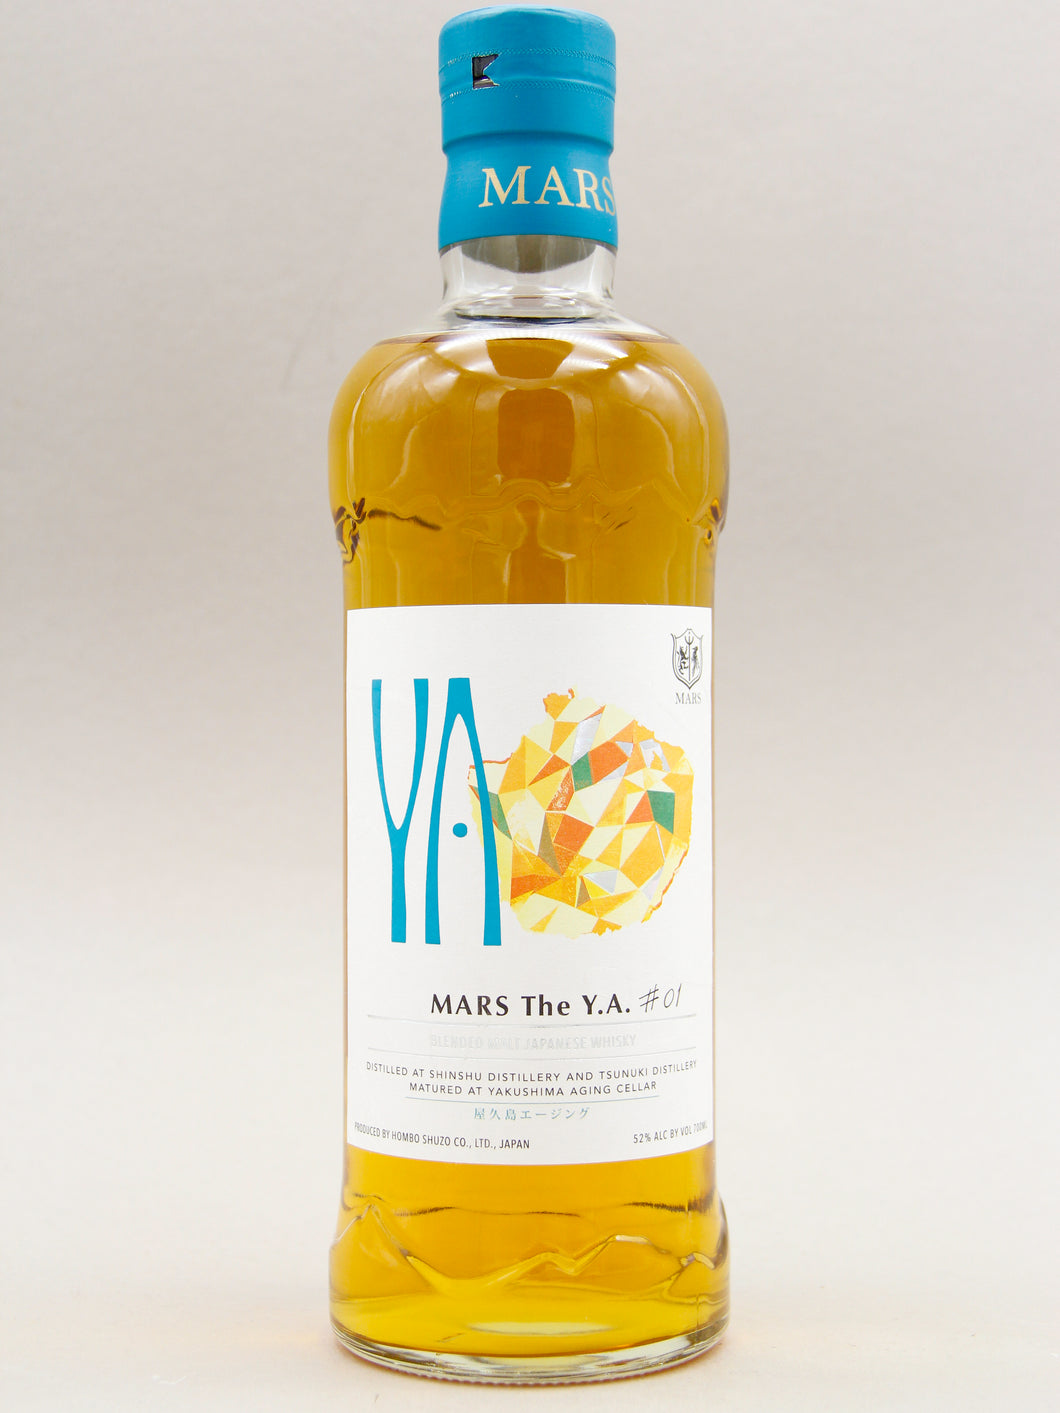 Mars, Mars the Y.A. #01, Blended Malt Japanese Whisky, Japan (52%, 70cl)